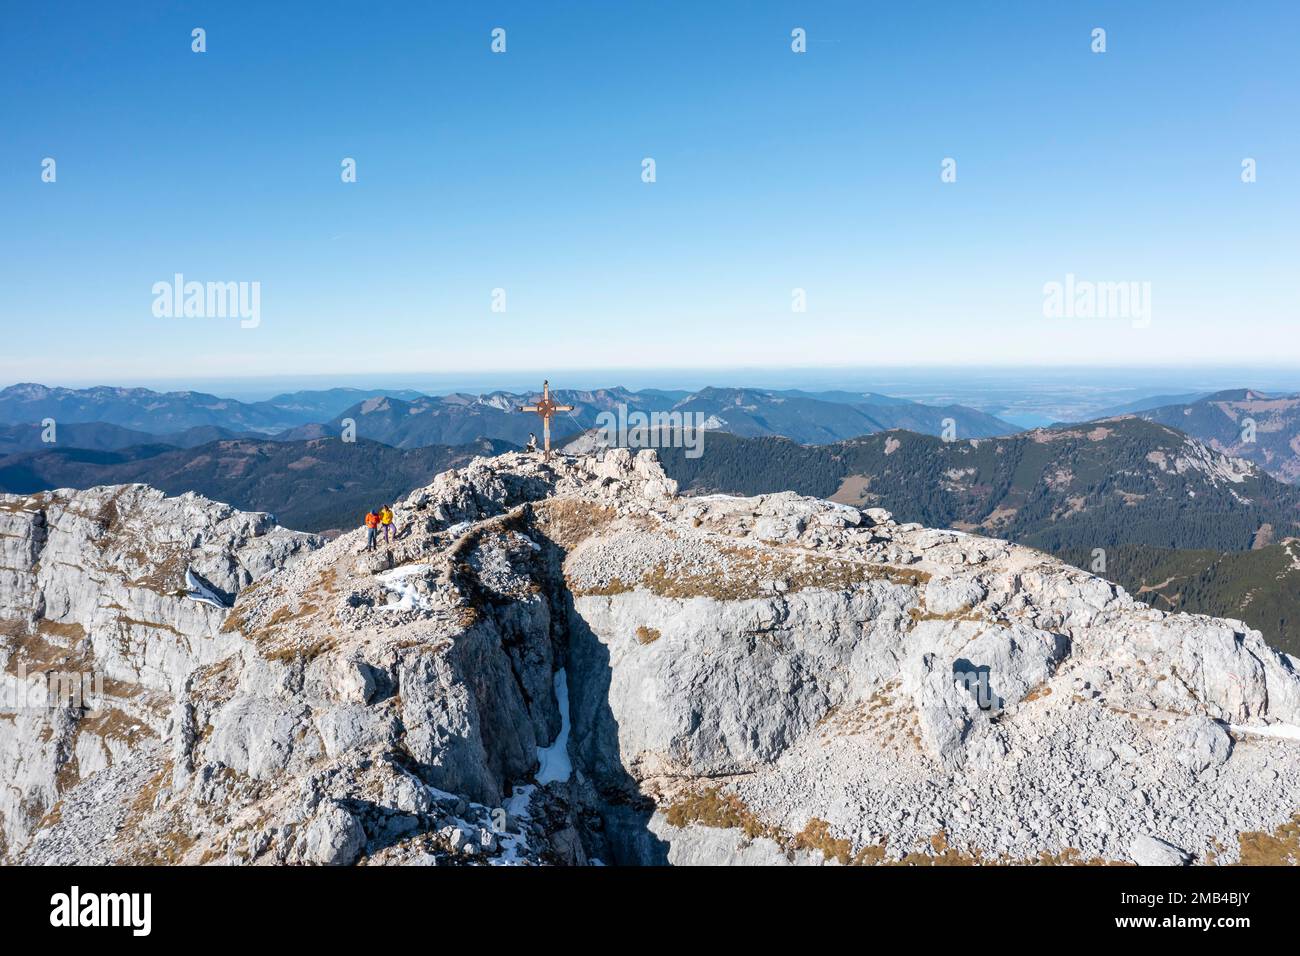 Veduta aerea, Guffertspitze con croce sommitale, cima del Guffert, Alpi Brandenberg, Alpi calcaree settentrionali, Alpi orientali, Tirolo, Austria Foto Stock